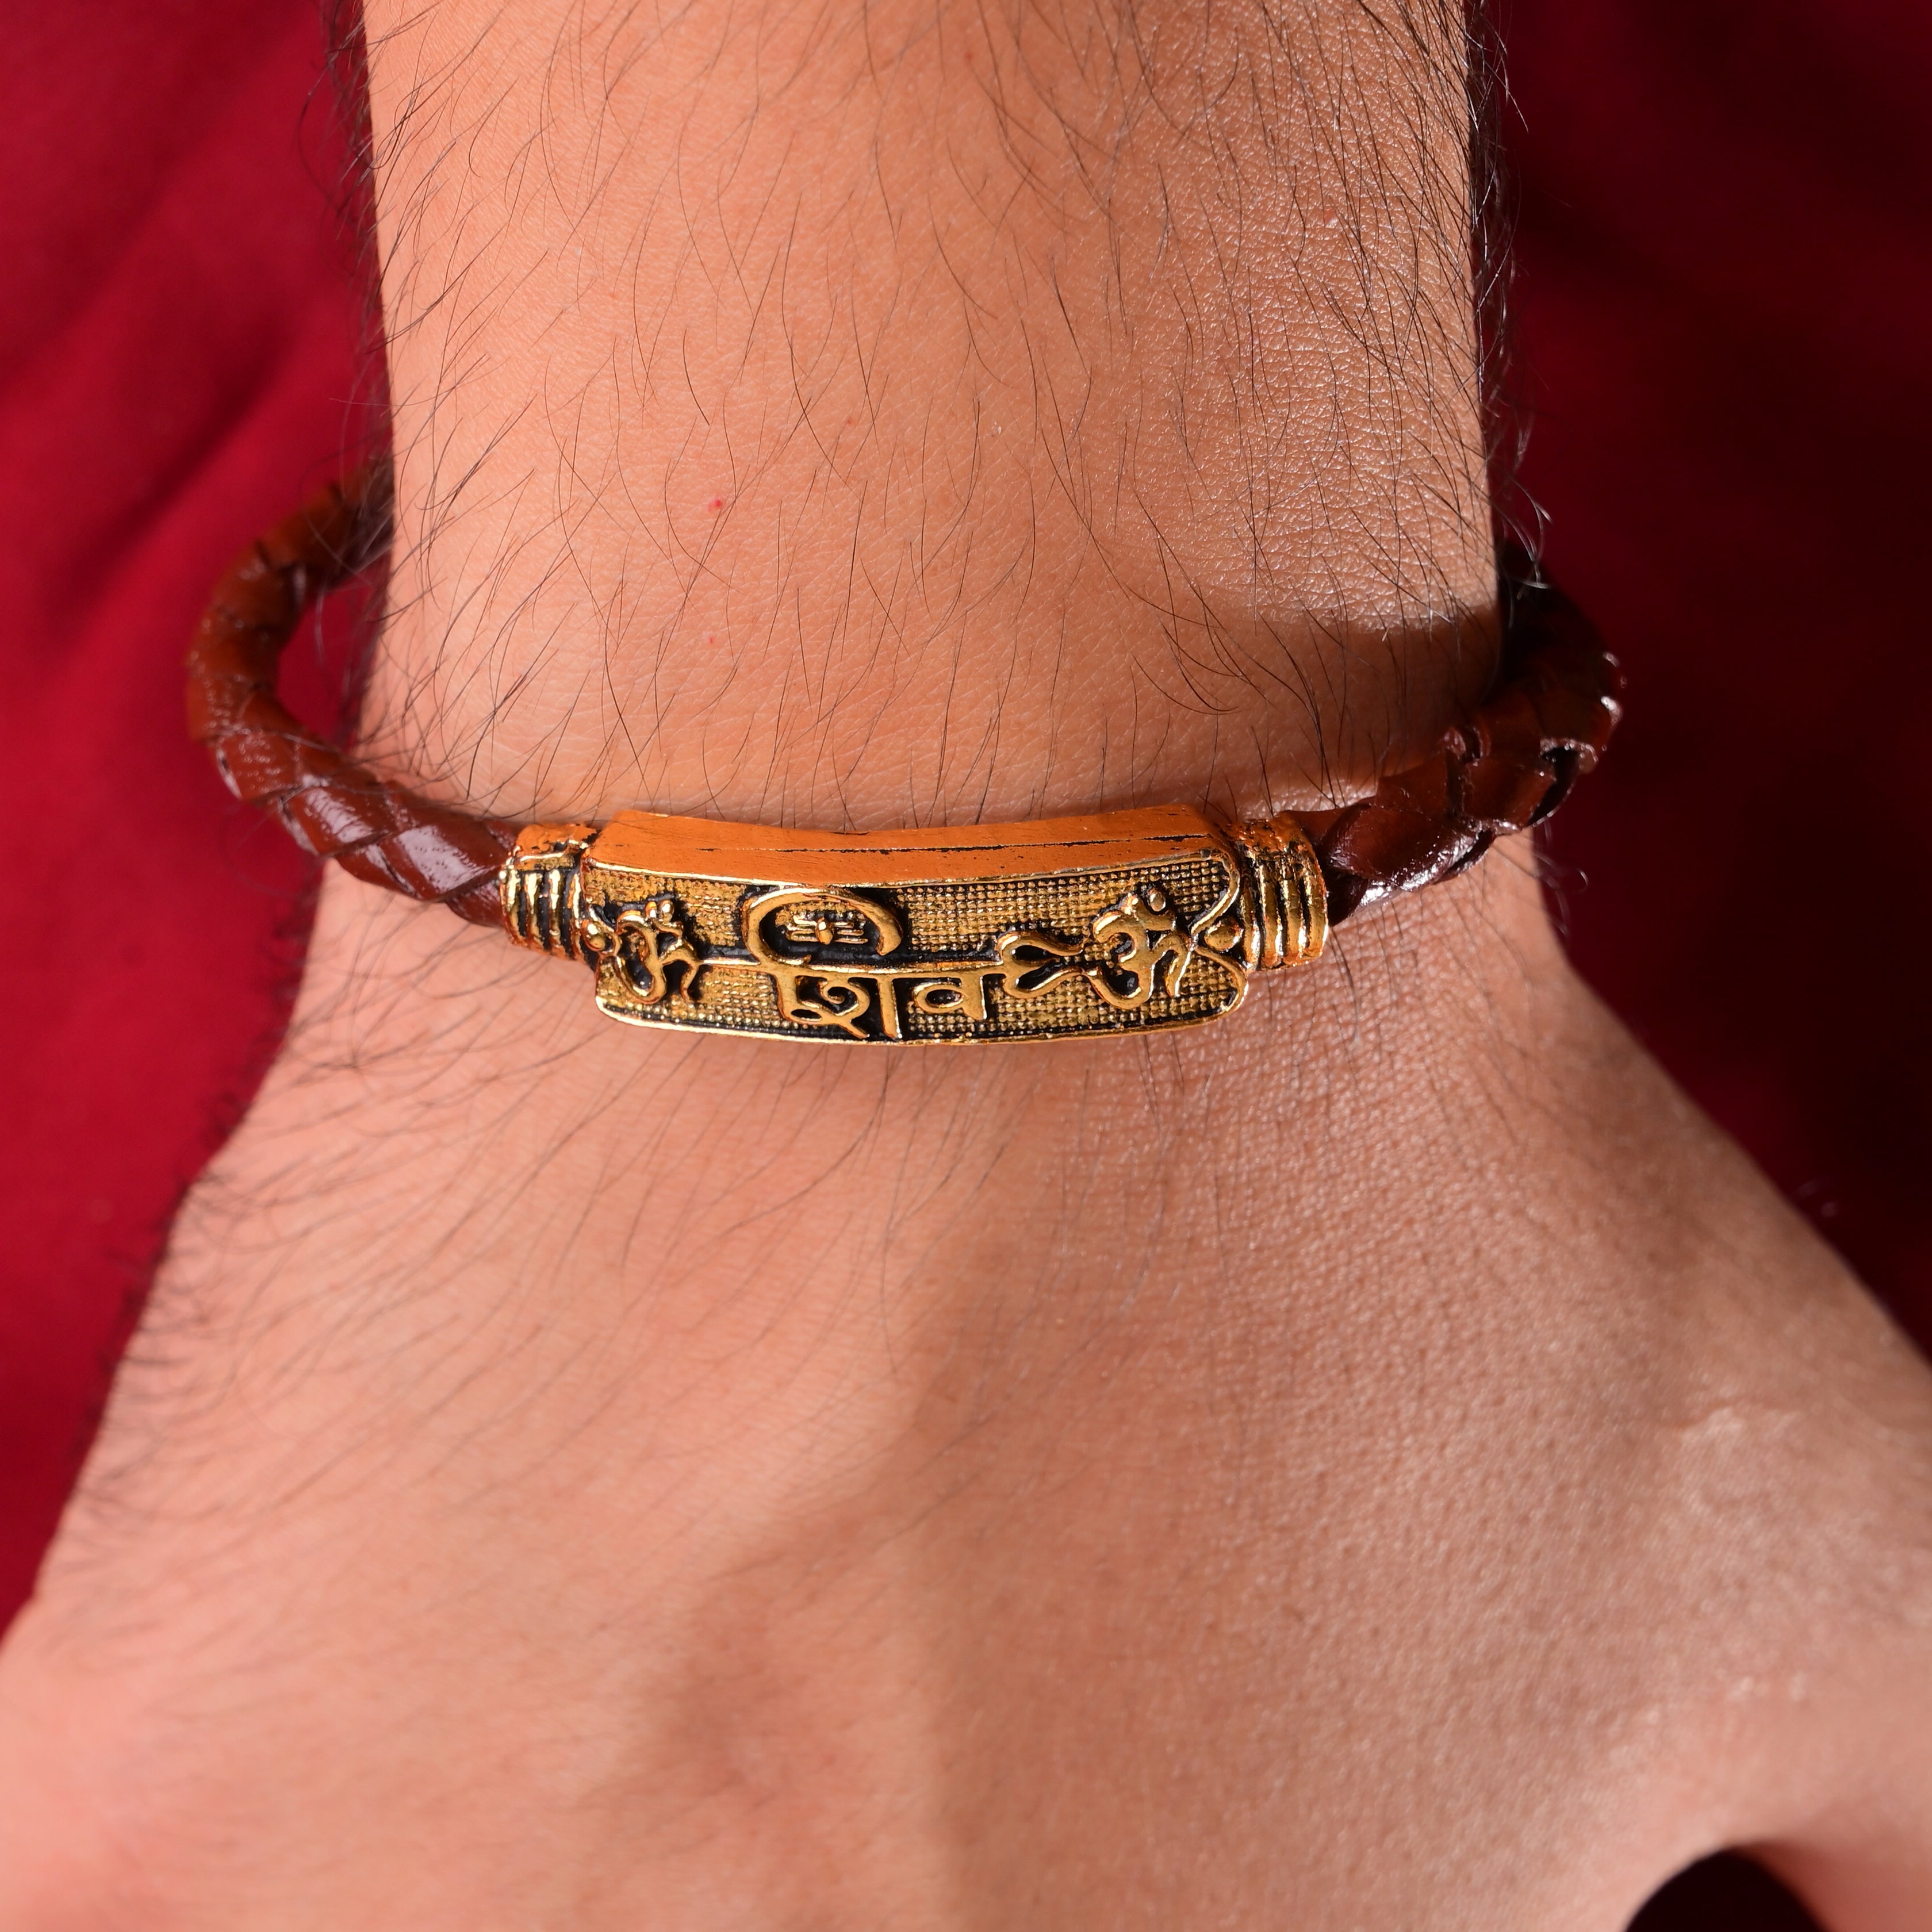 OM Rudraksha Bracelet Mahadev Lord Shiva Fashion Wrist Band Christmas Gifts  | eBay